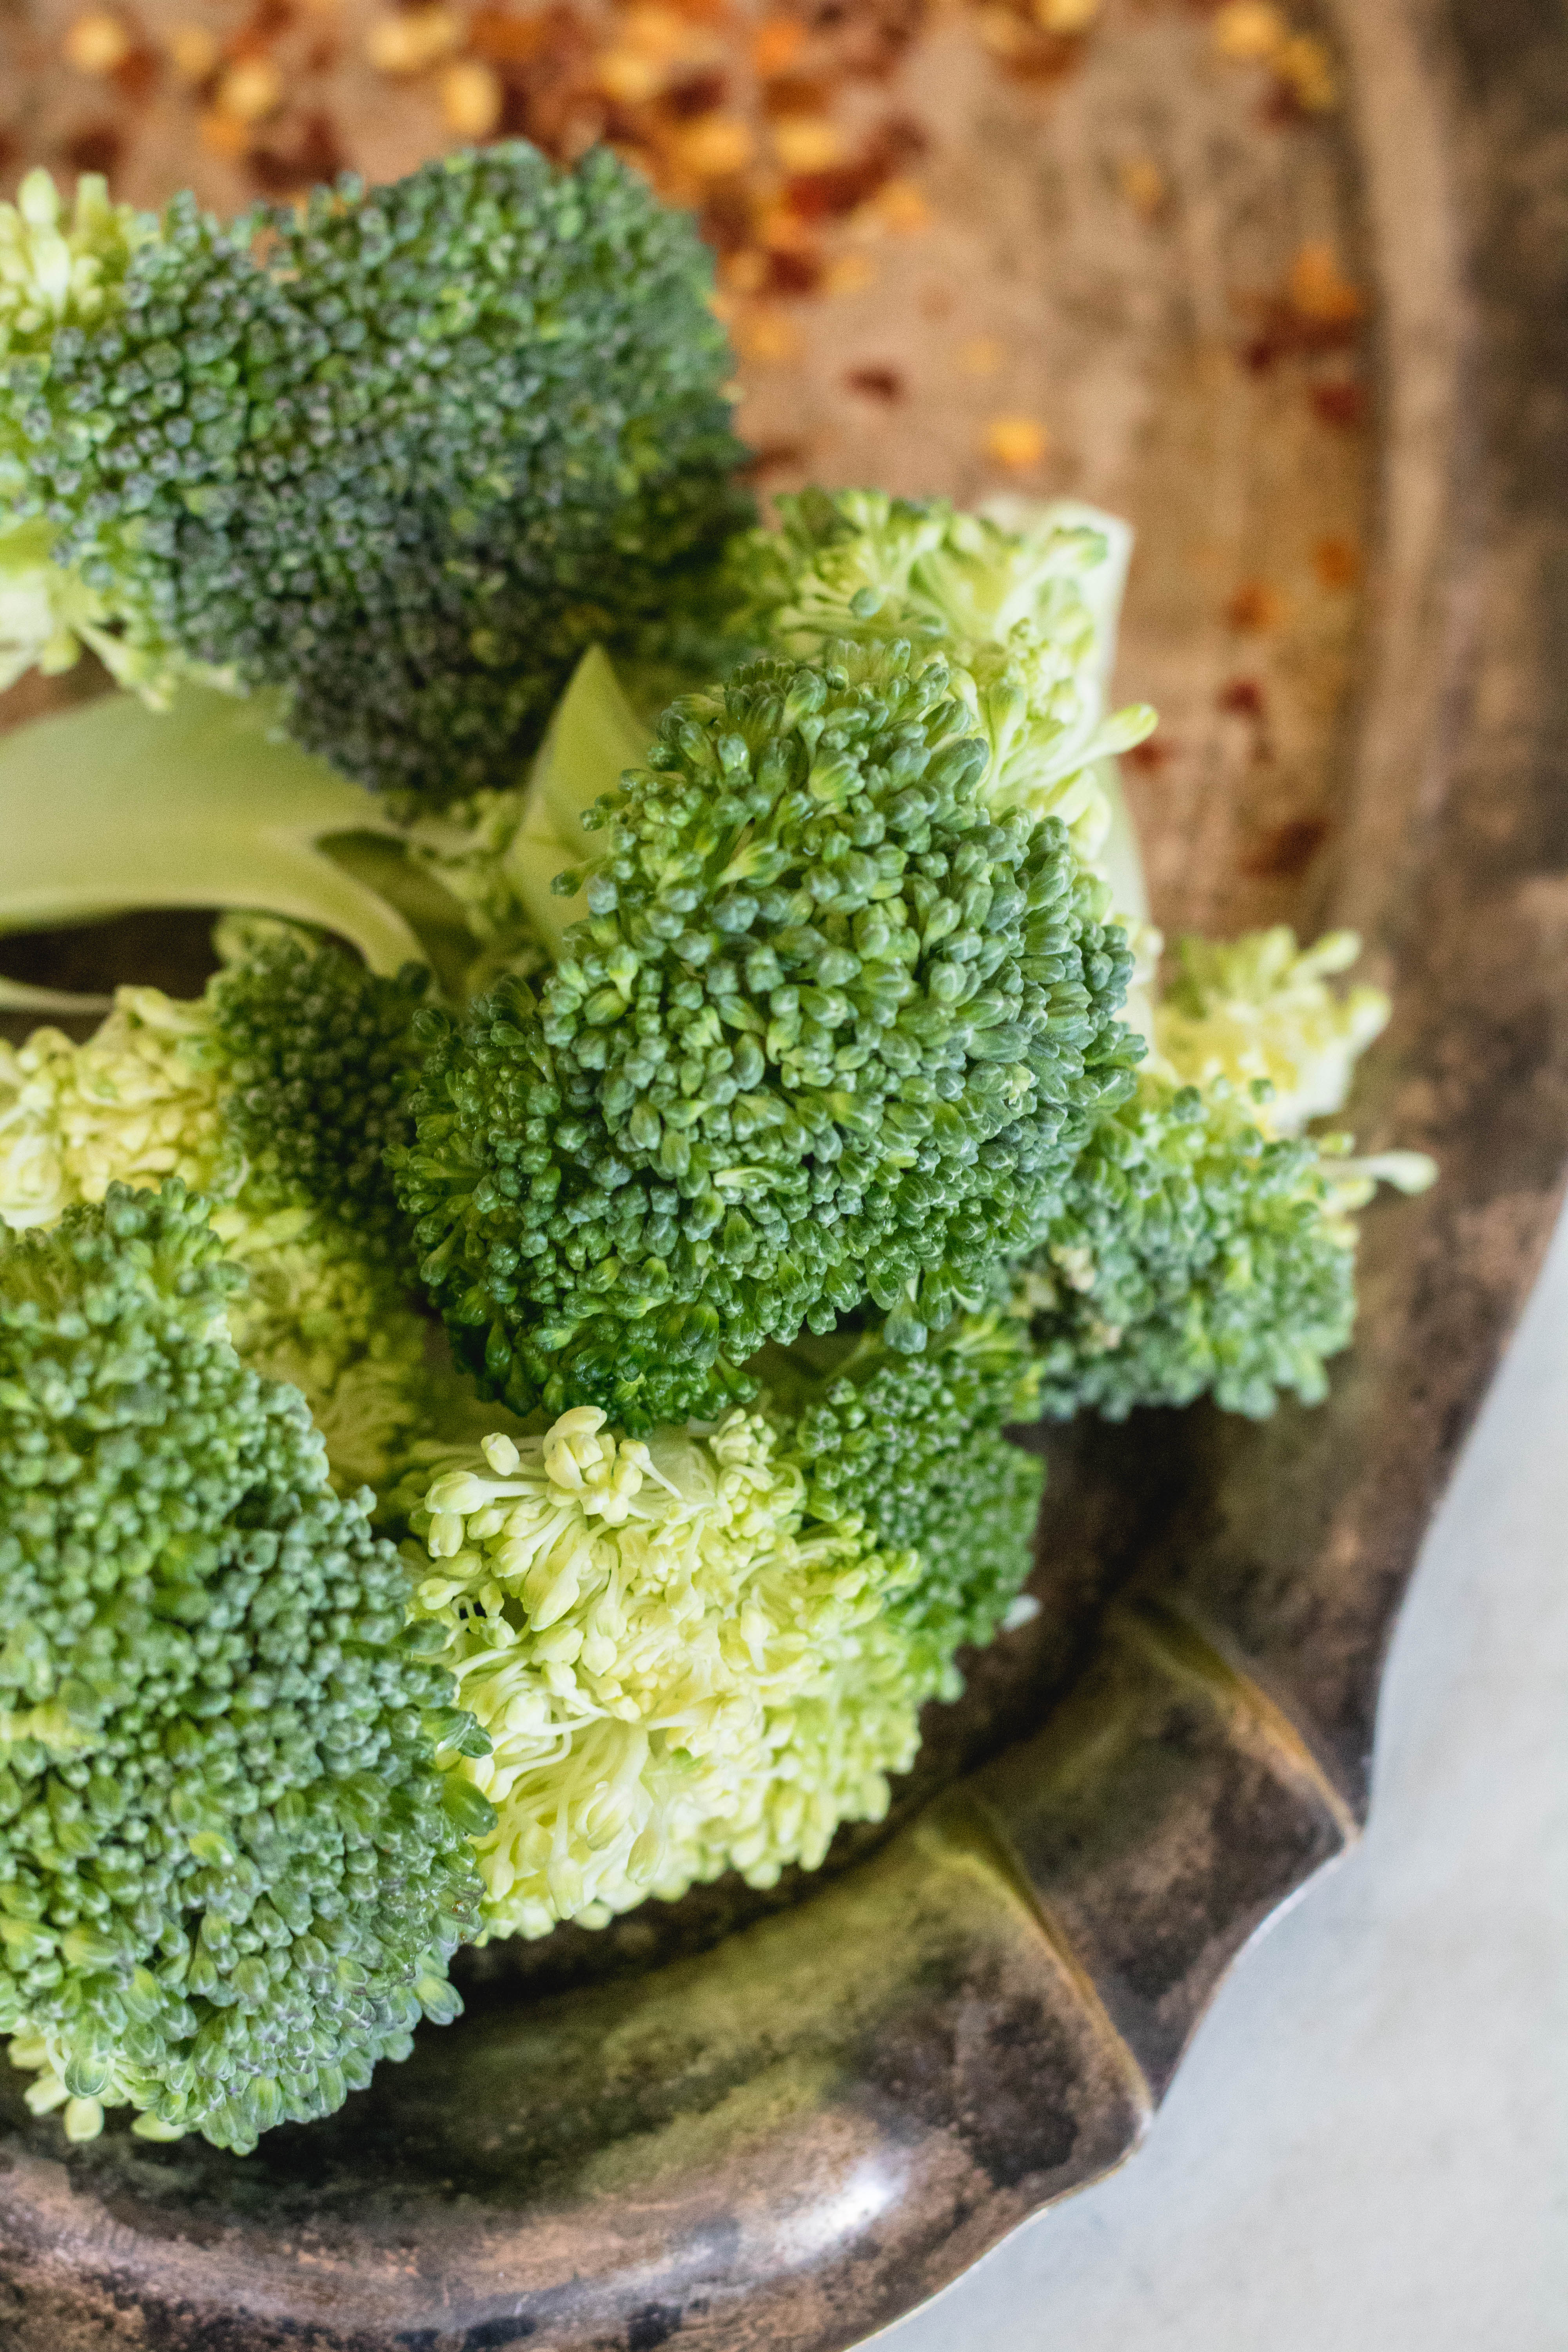 Air fryer broccoli recipe